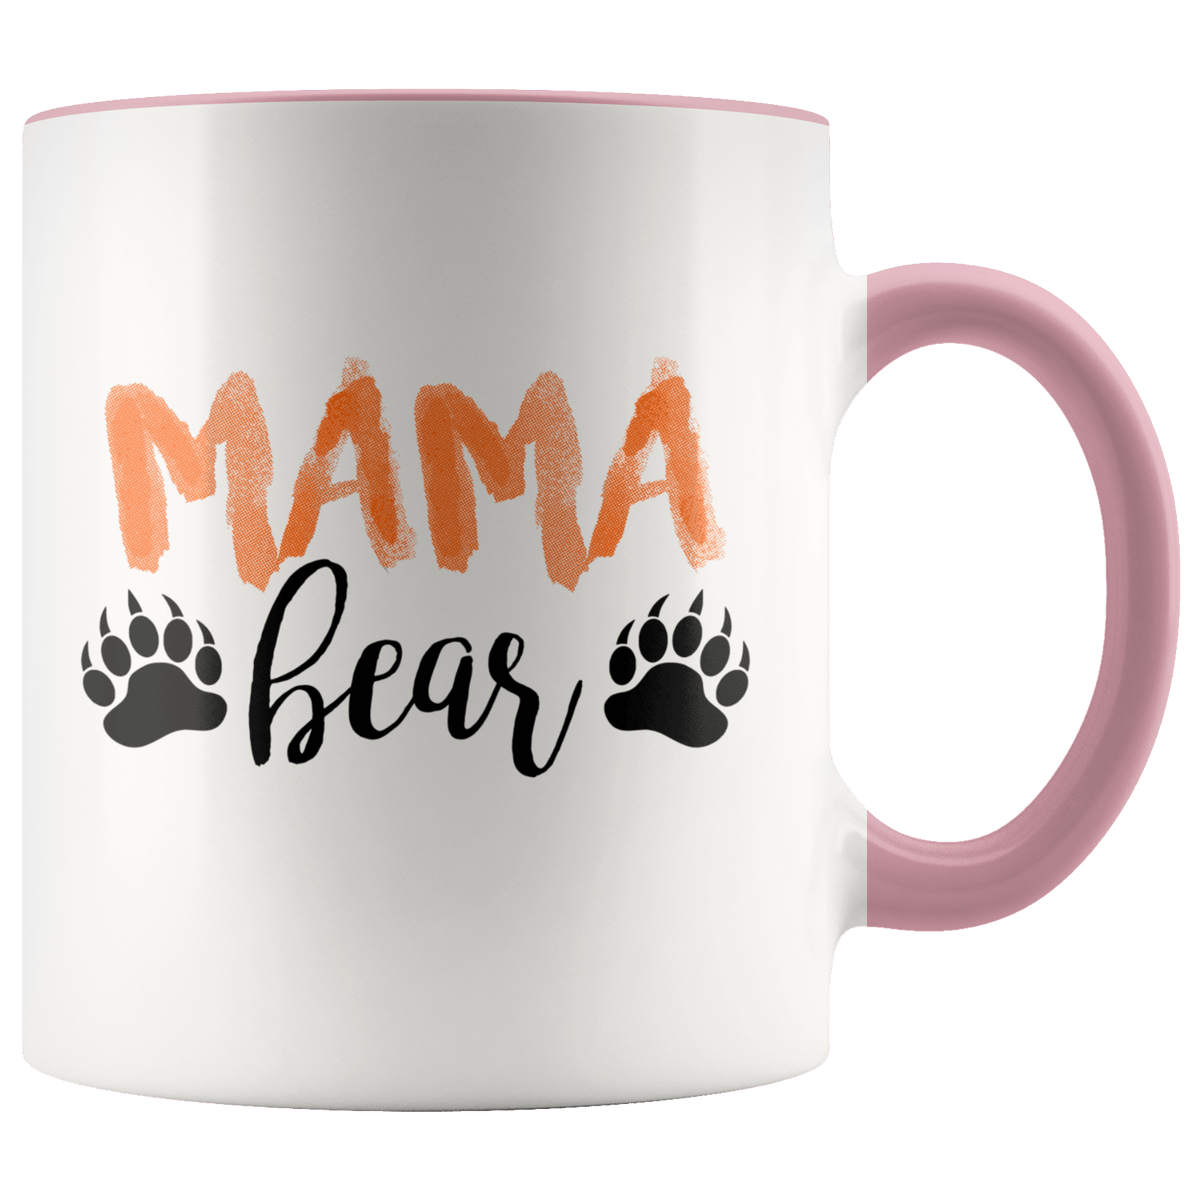 Monster Mom, Mama Bear, Super Moms Club 11 oz and 15 oz Coffee Mugs - 11 oz